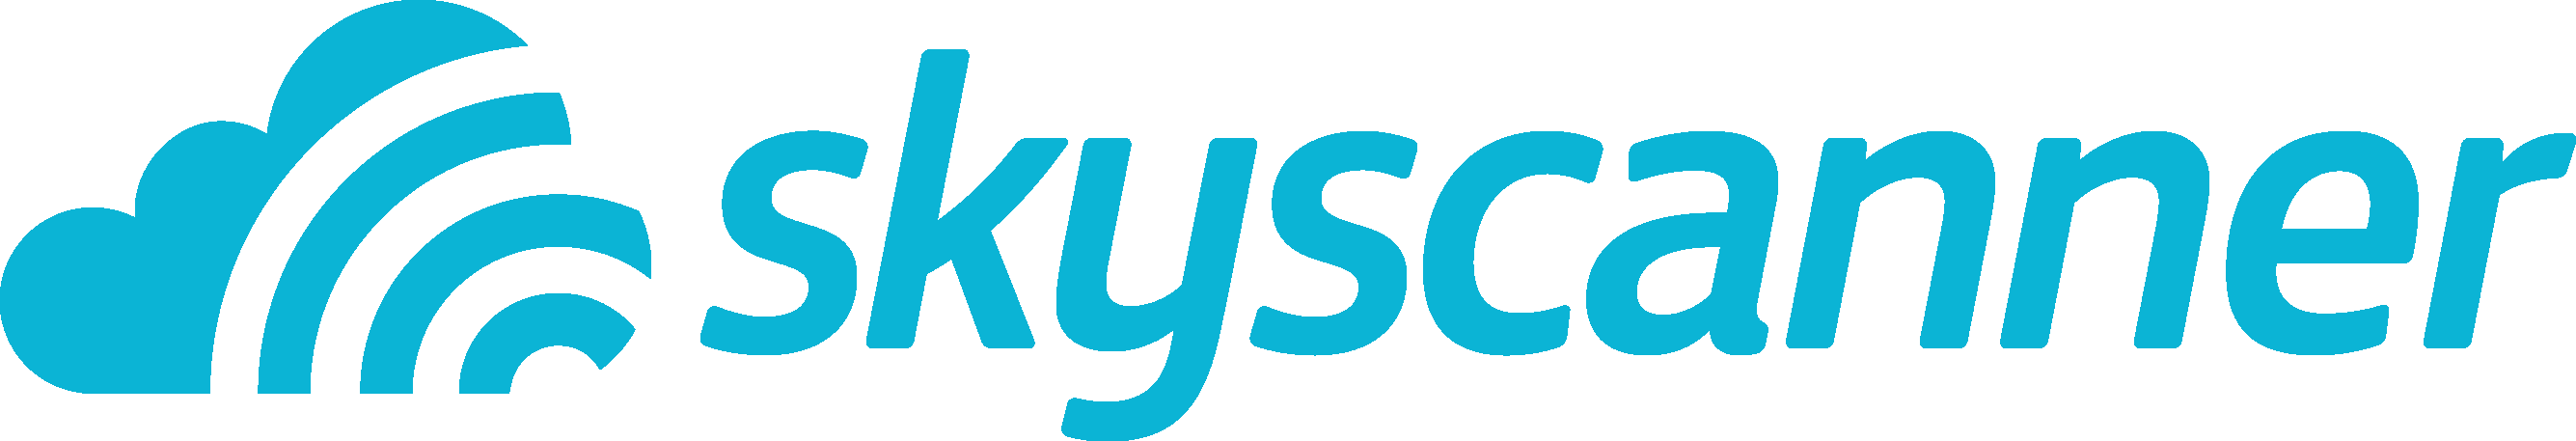 Skyscanner Logo Download Vector